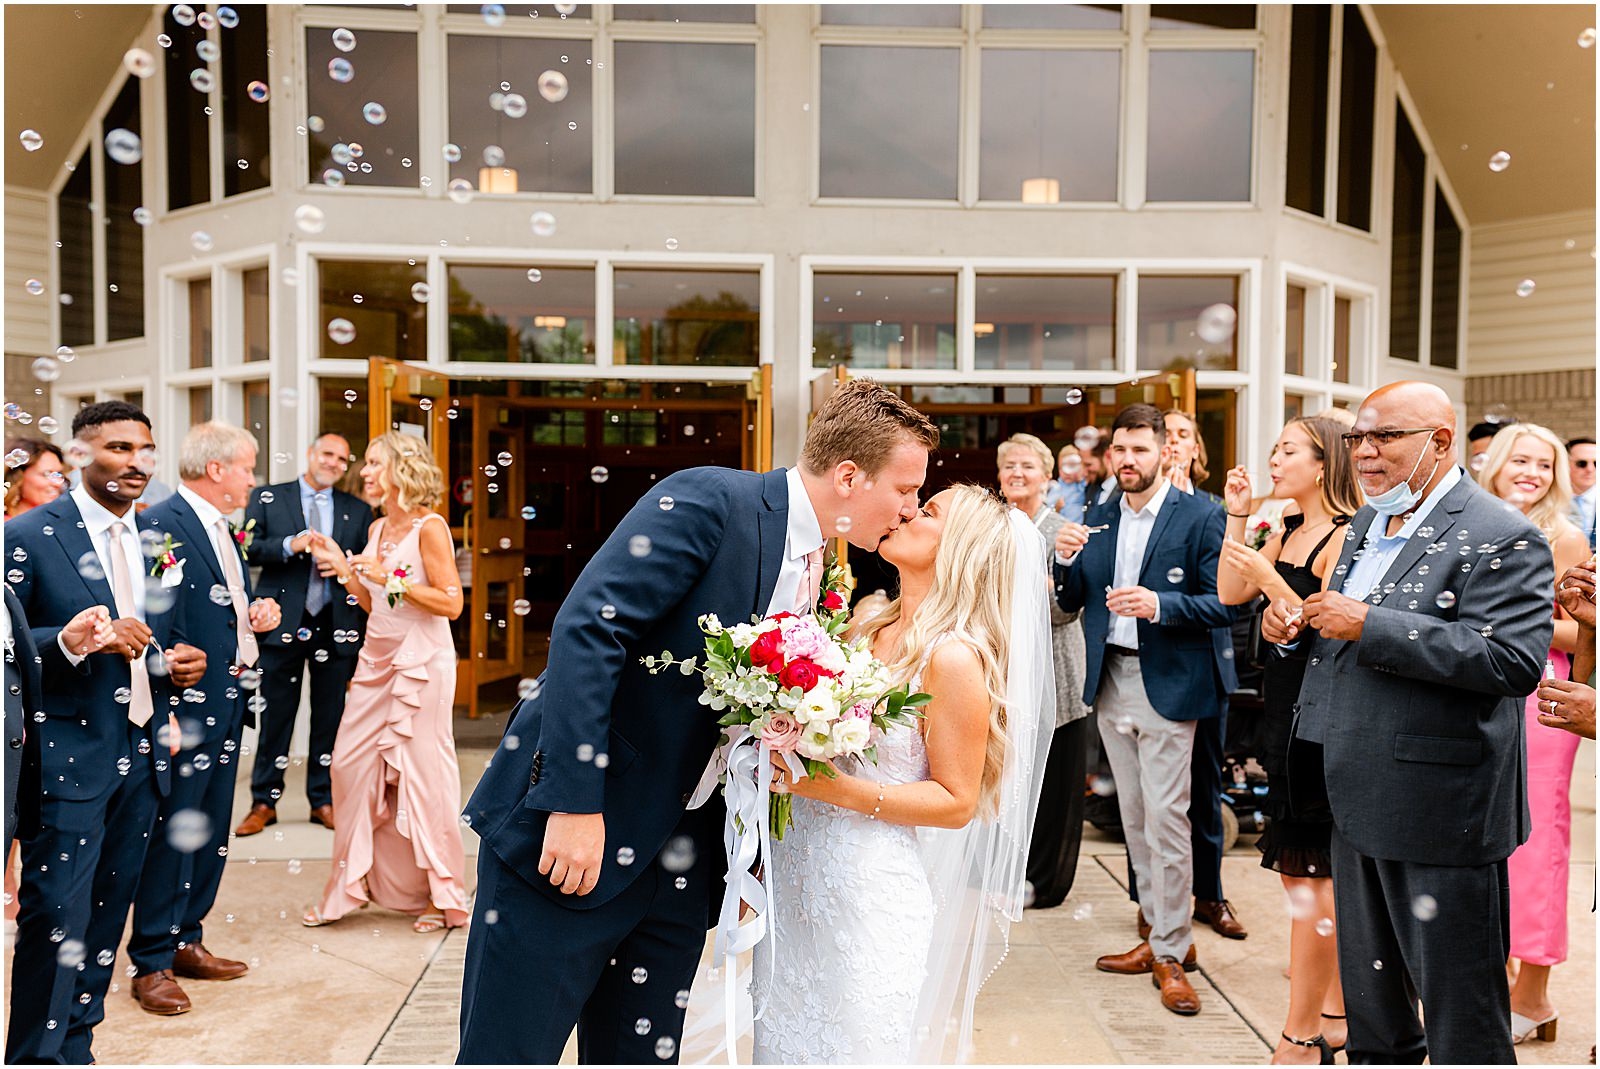 An Evansville Country Club Wedding | Madison and Christiaan | Bret and Brandie | Bret and Brandie | Evansville Photographers | @bretandbrandie-0137.jpg